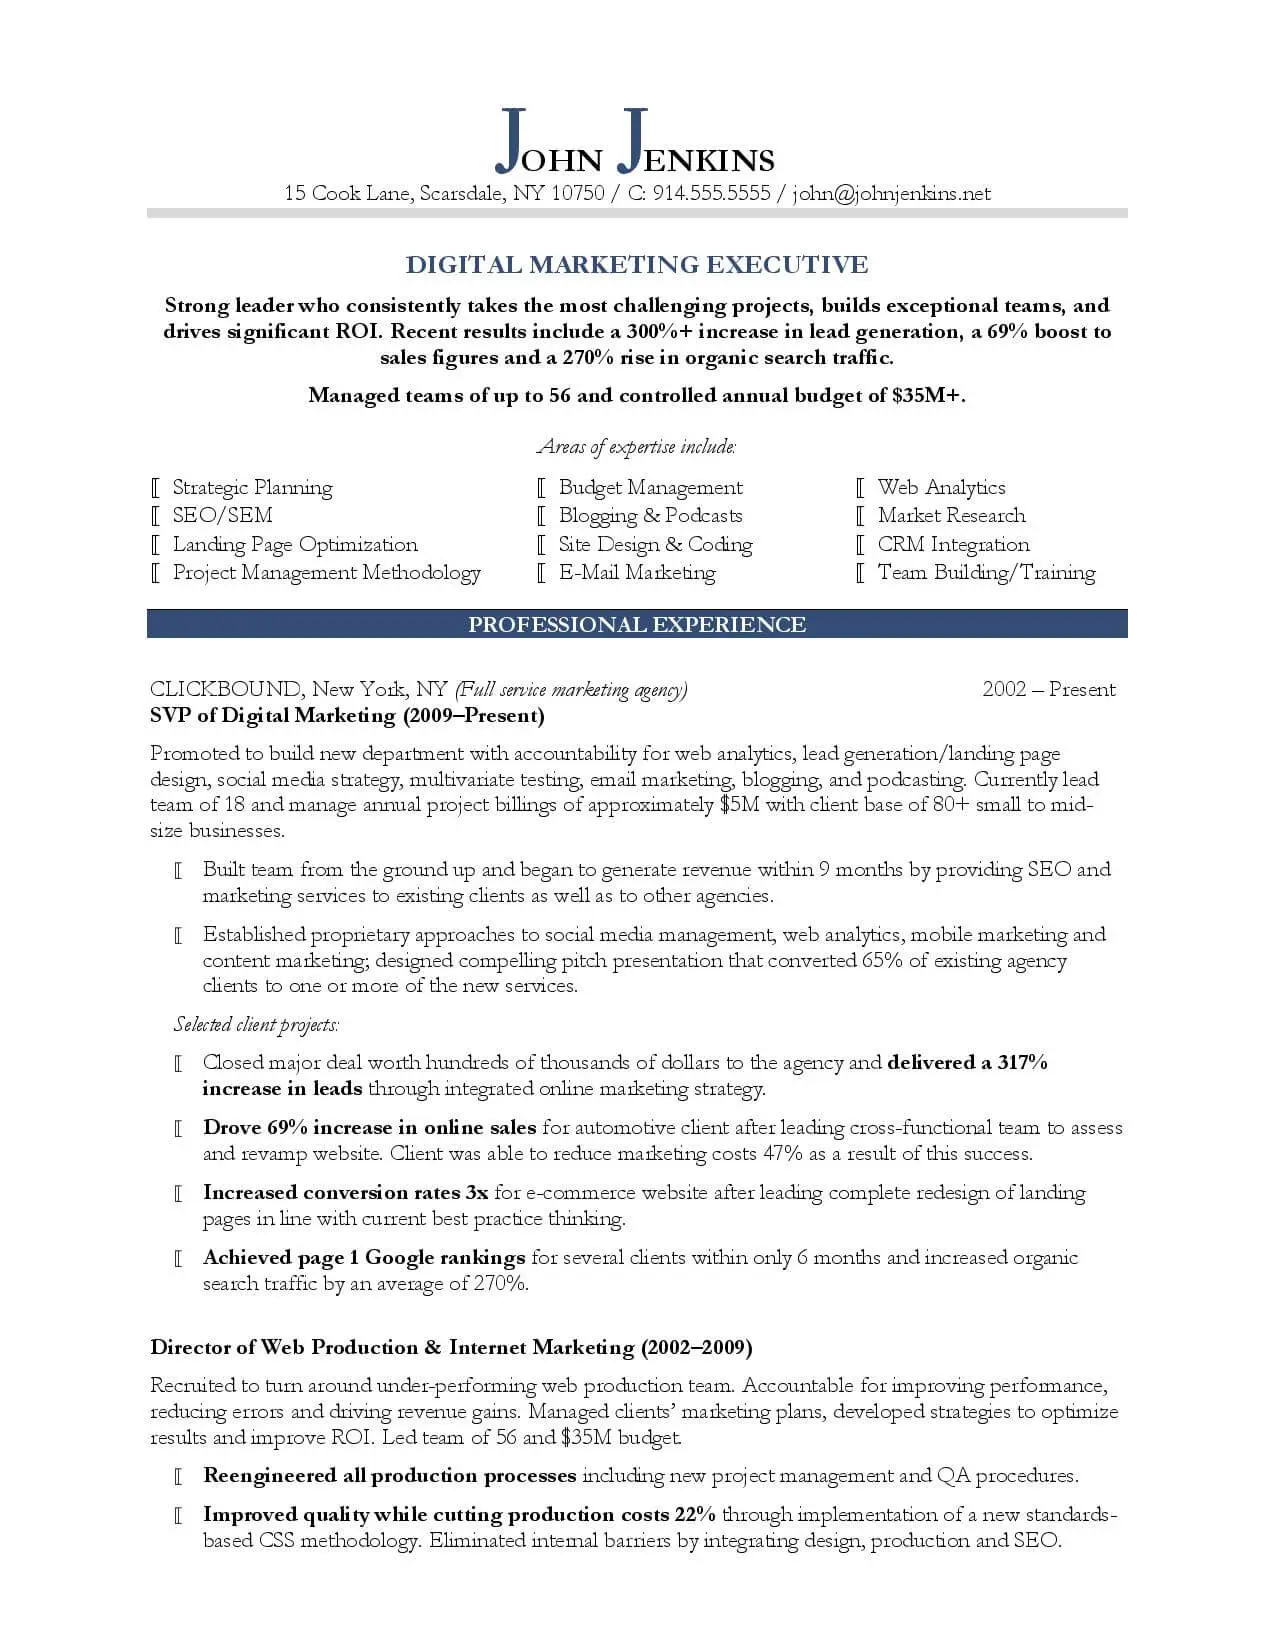 Digital Marketing Executive-resume-template